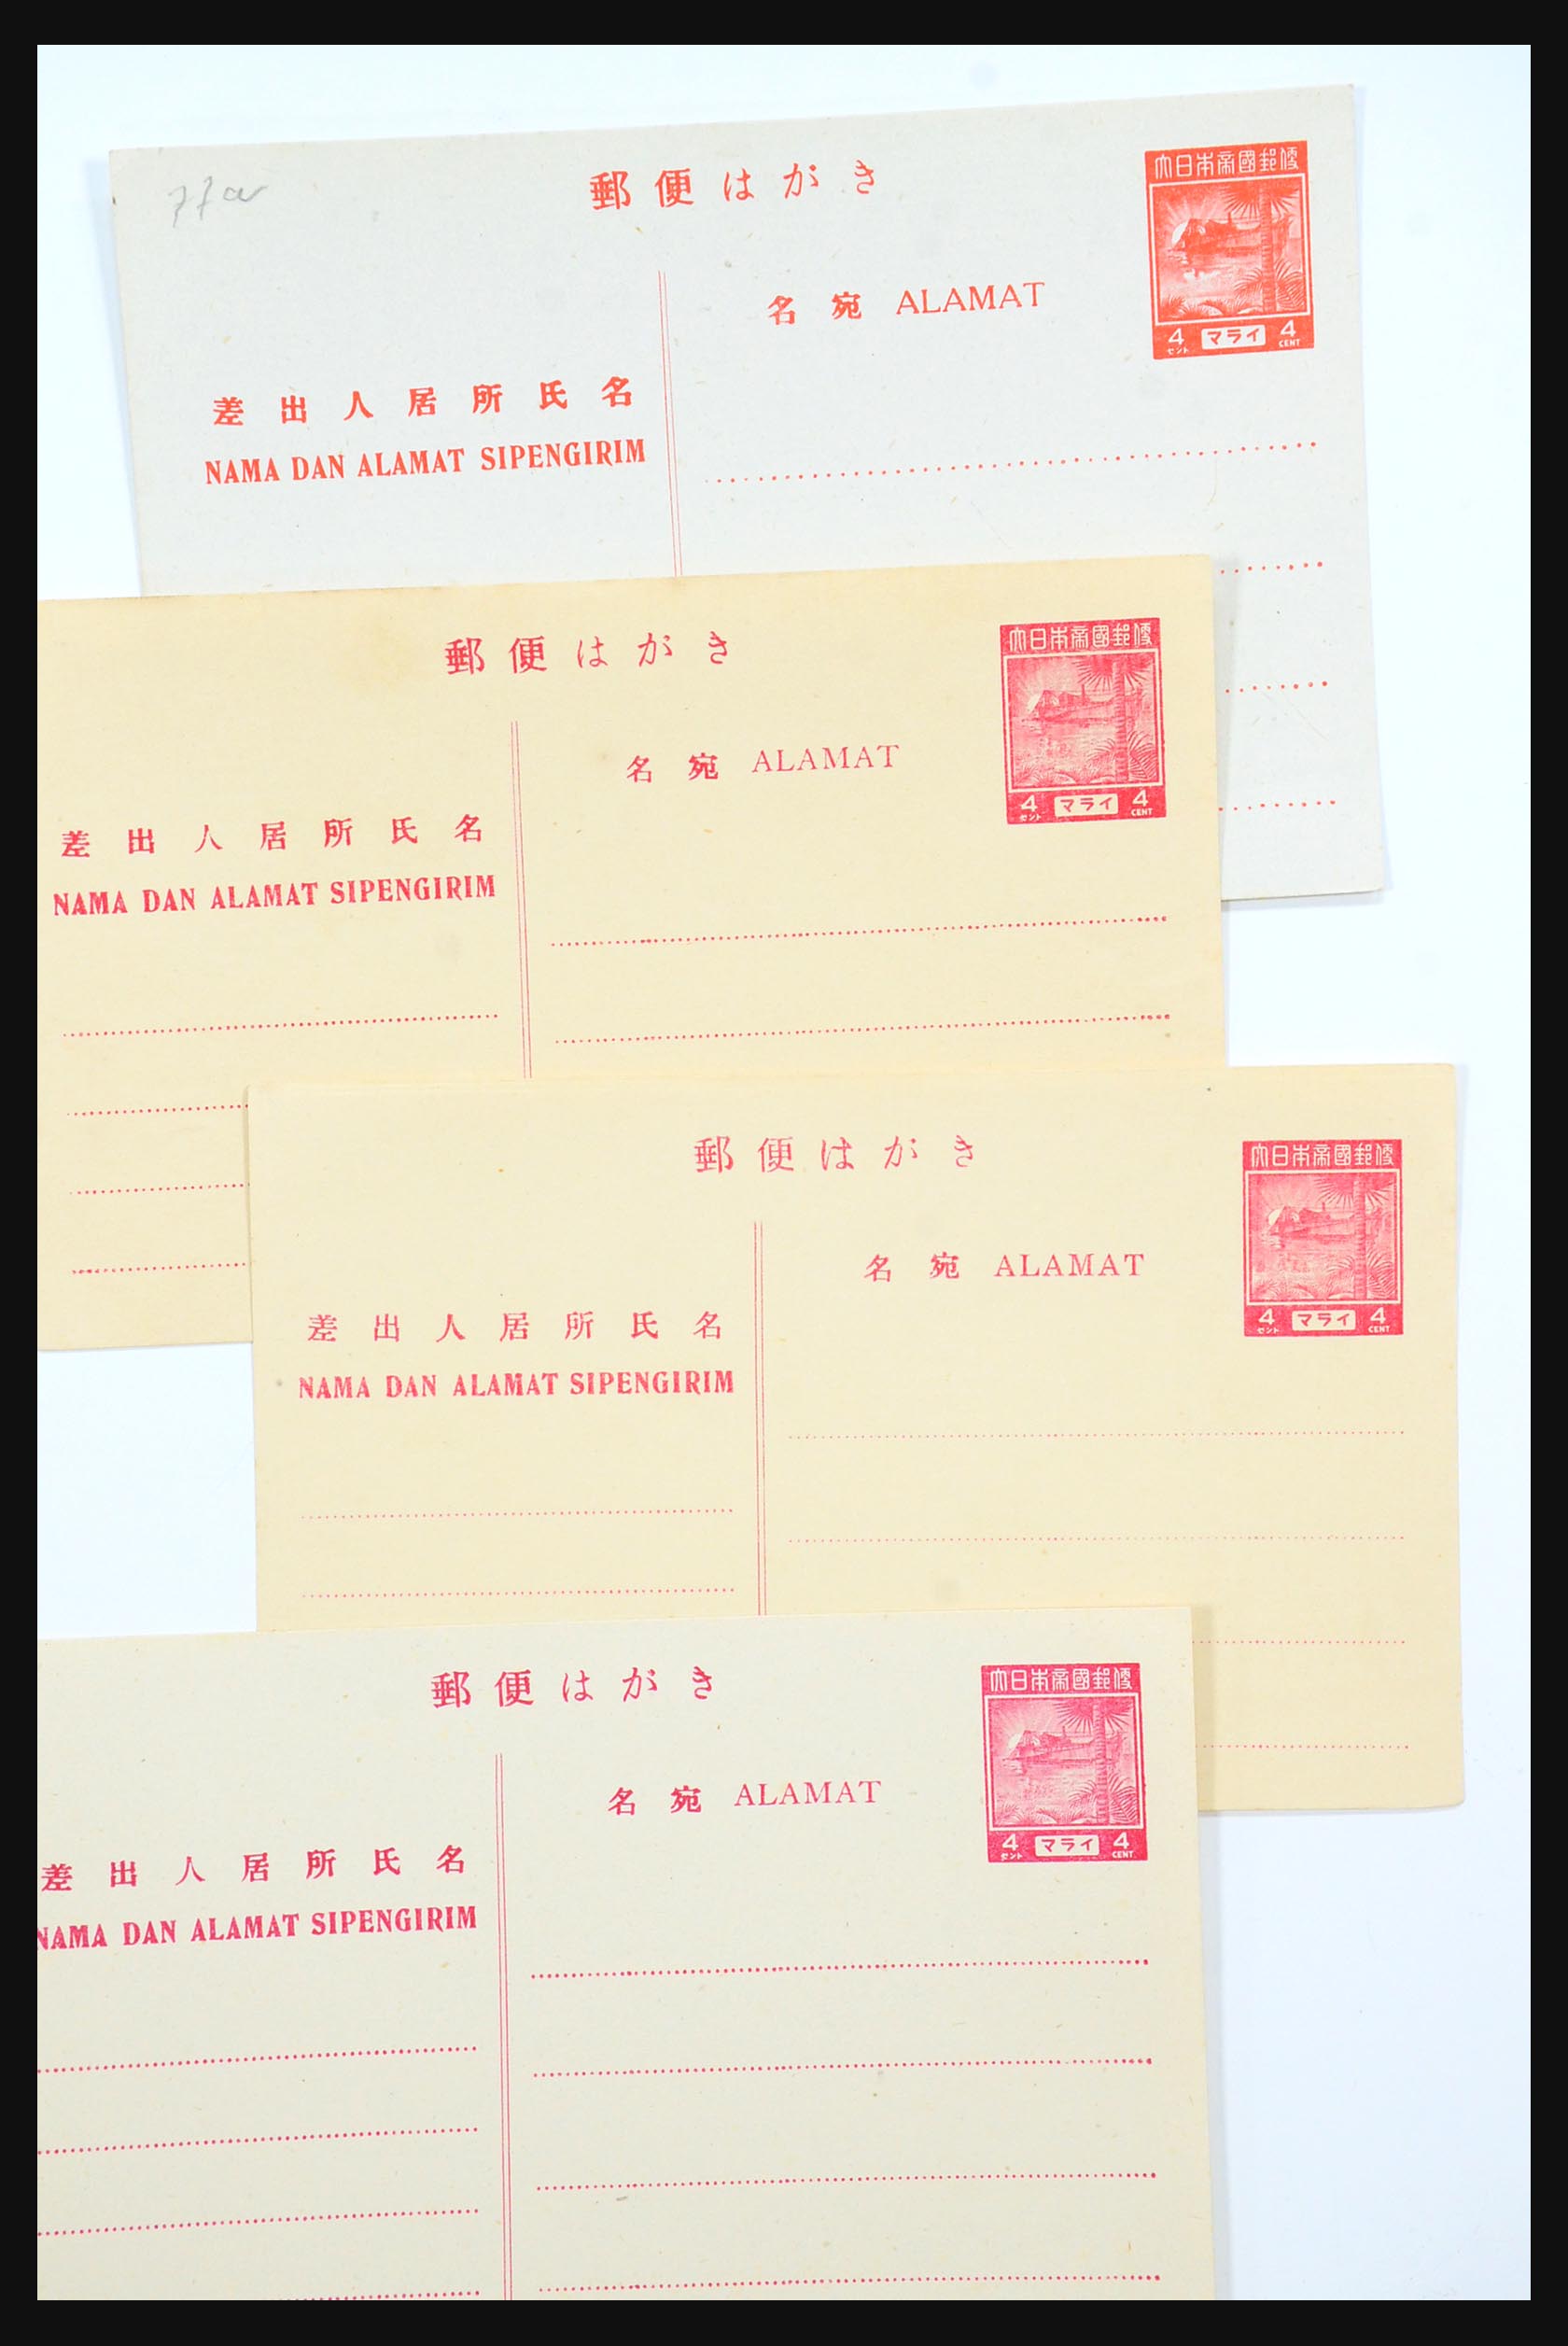 31362 119 - 31362 Nederlands Indië Japanse bezetting brieven 1942-1945.